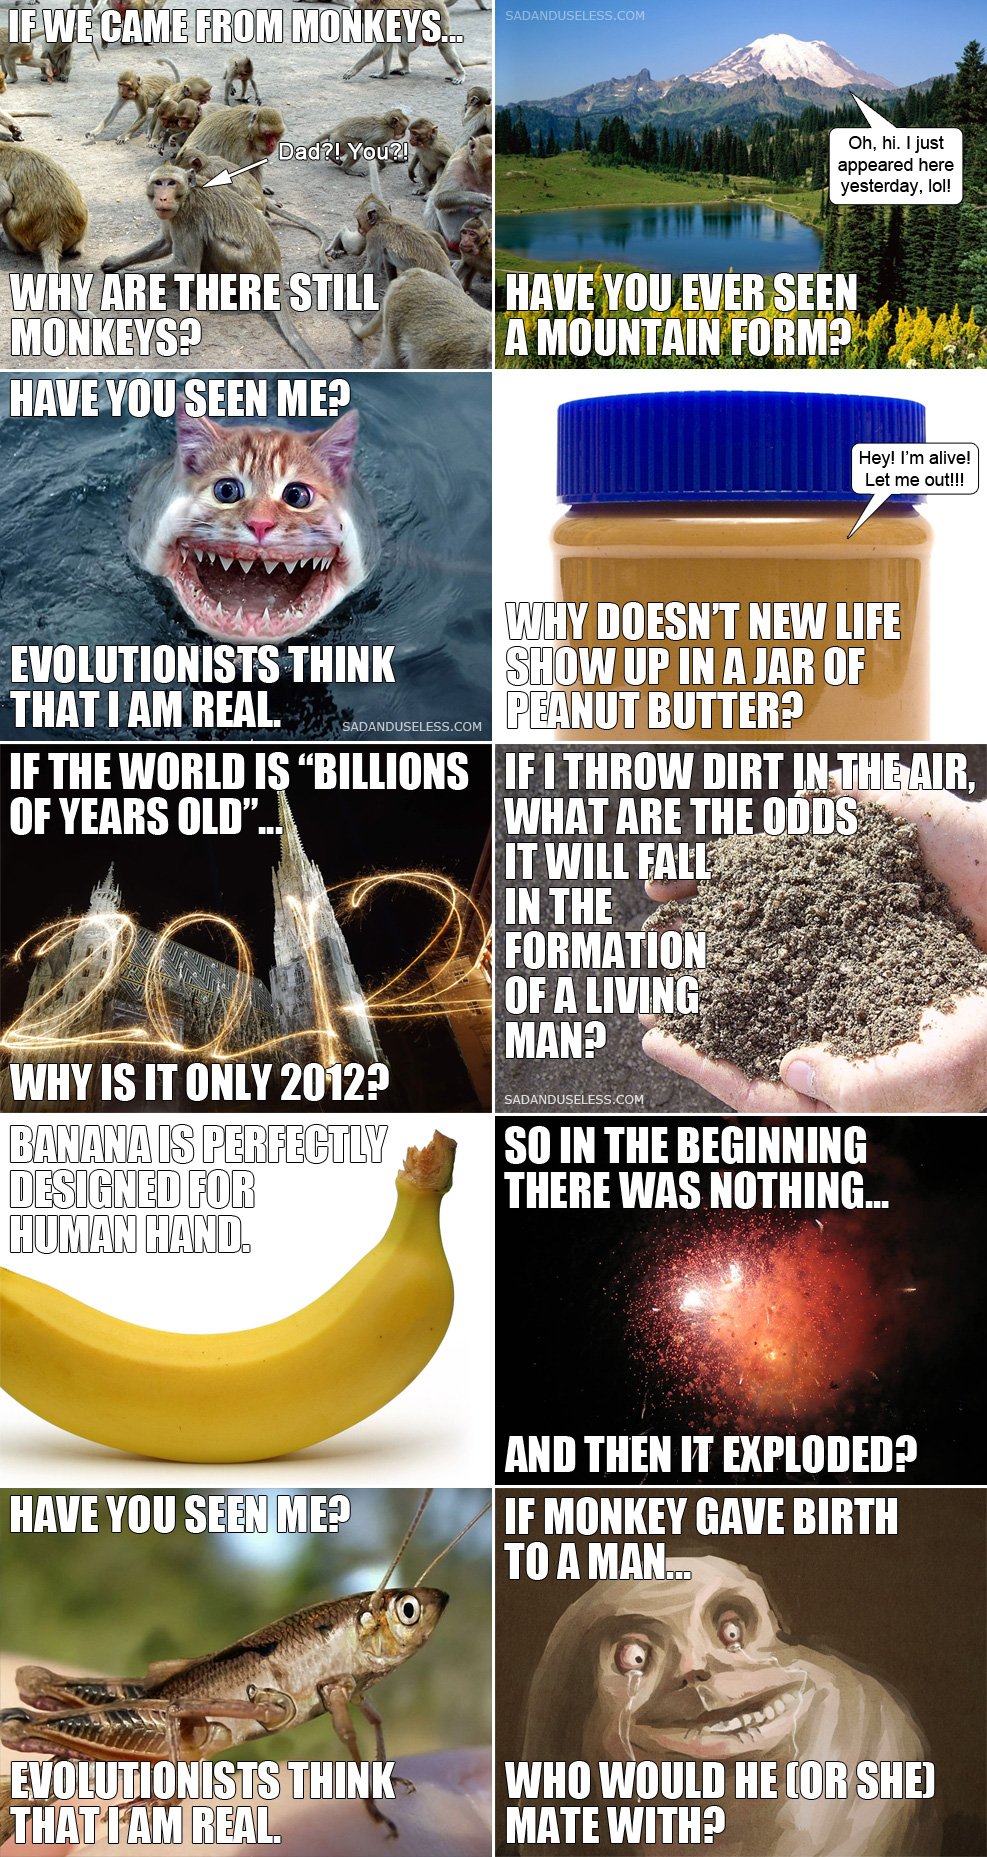 Evolutionists are crazy.